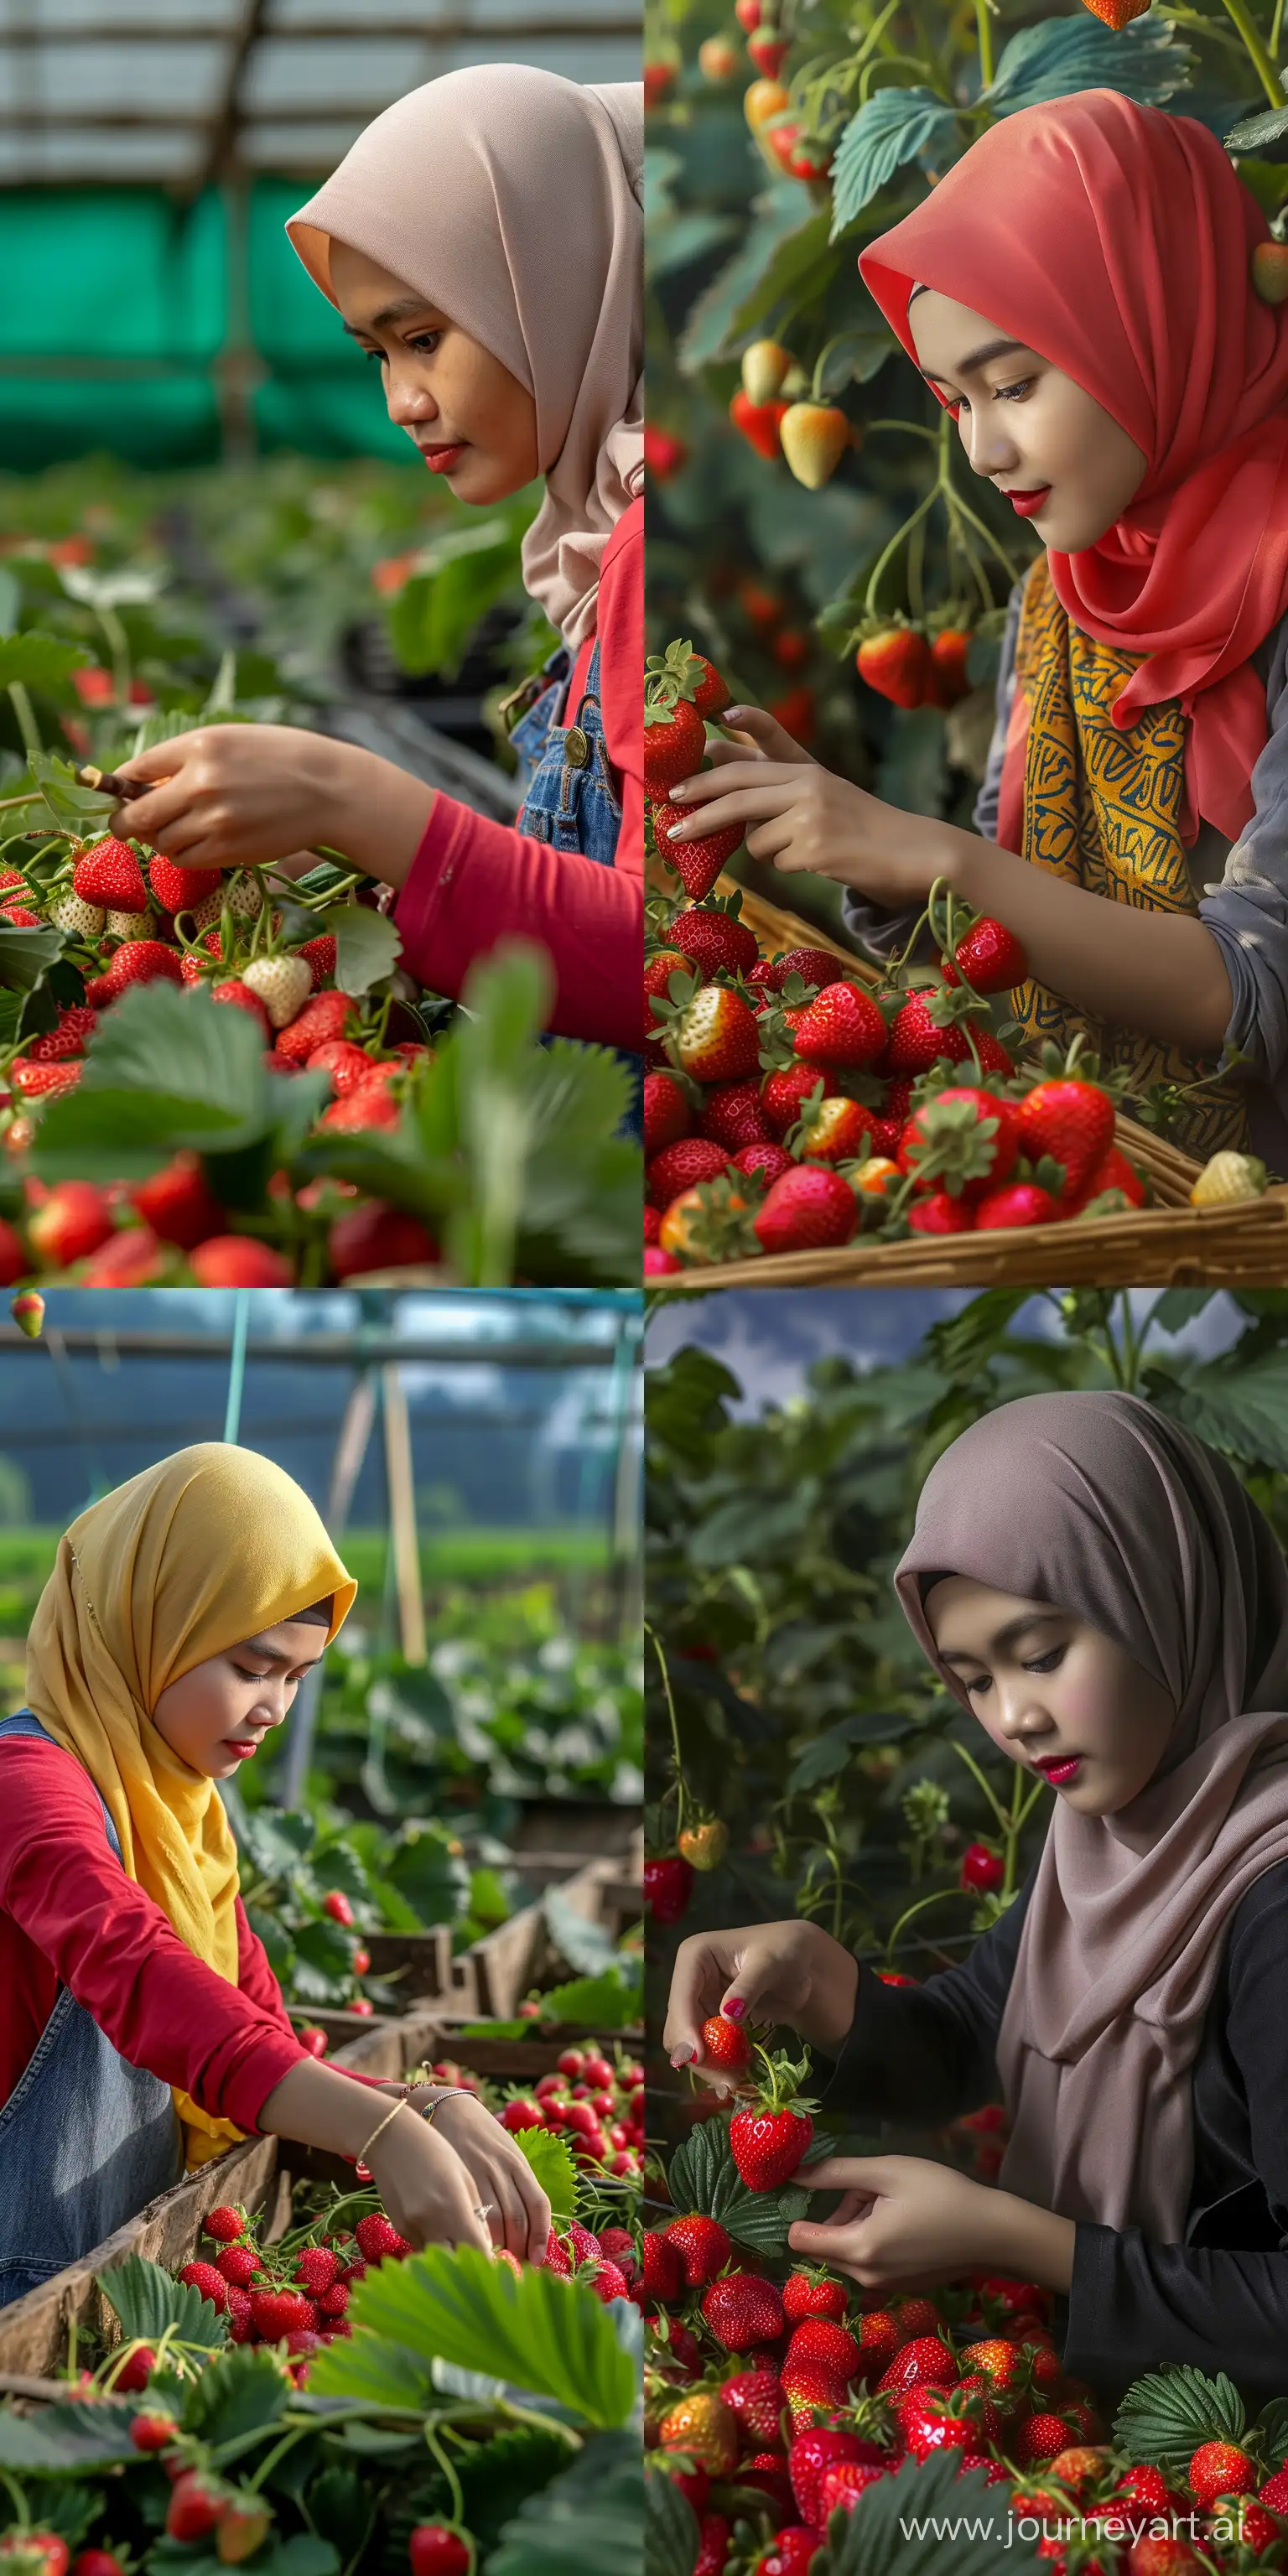 Indonesian-Muslim-Woman-Harvesting-Vibrant-Strawberries-in-Detailed-Rural-Setting